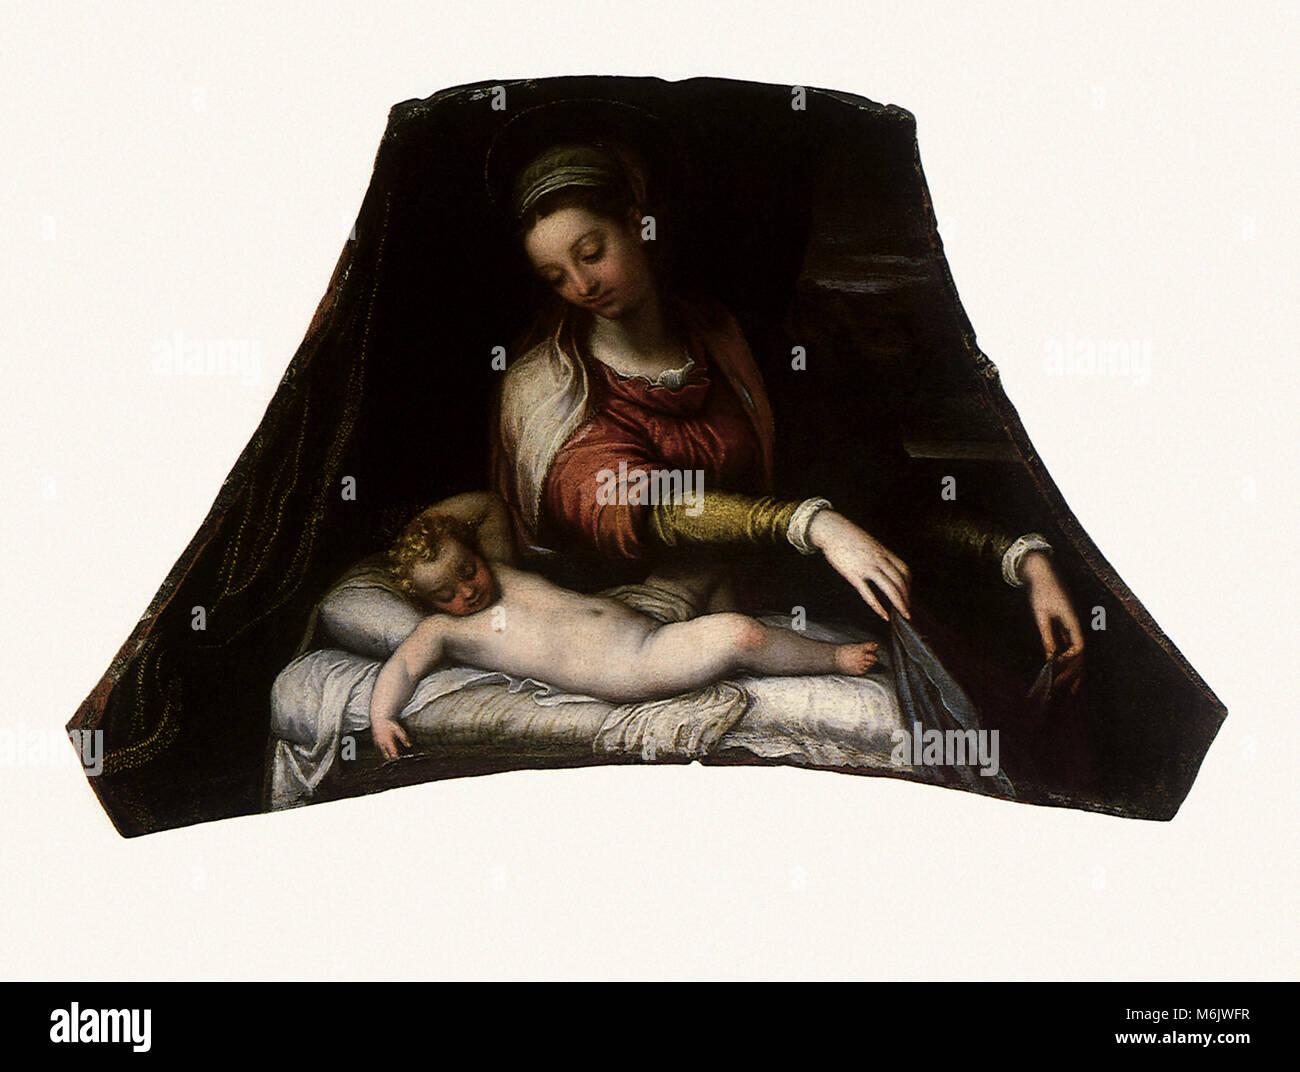 The Virgin Adoring the Sleeping Child, Fontana, Lavinia, 1590. Stock Photo